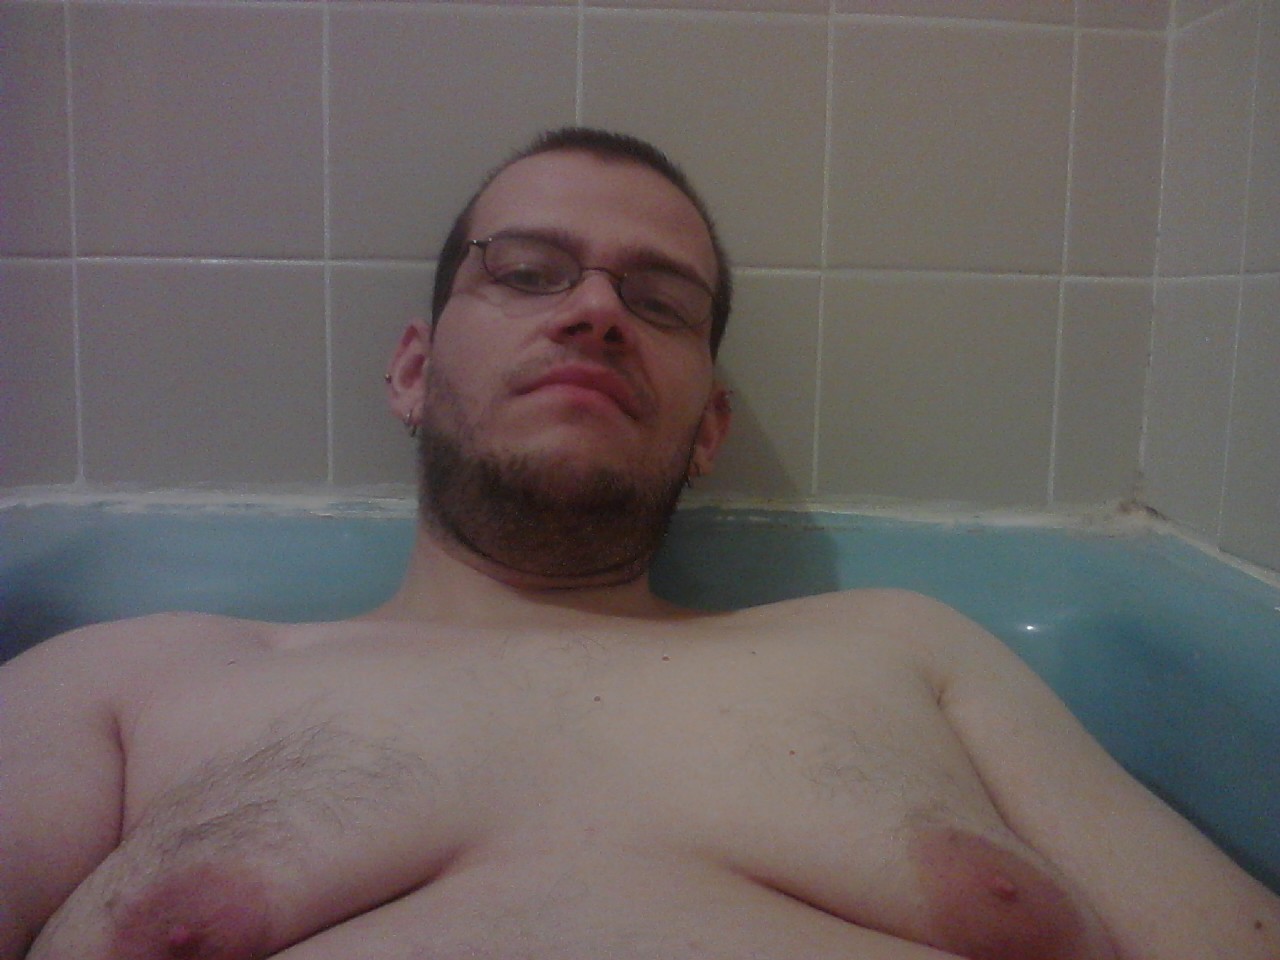 Bath time